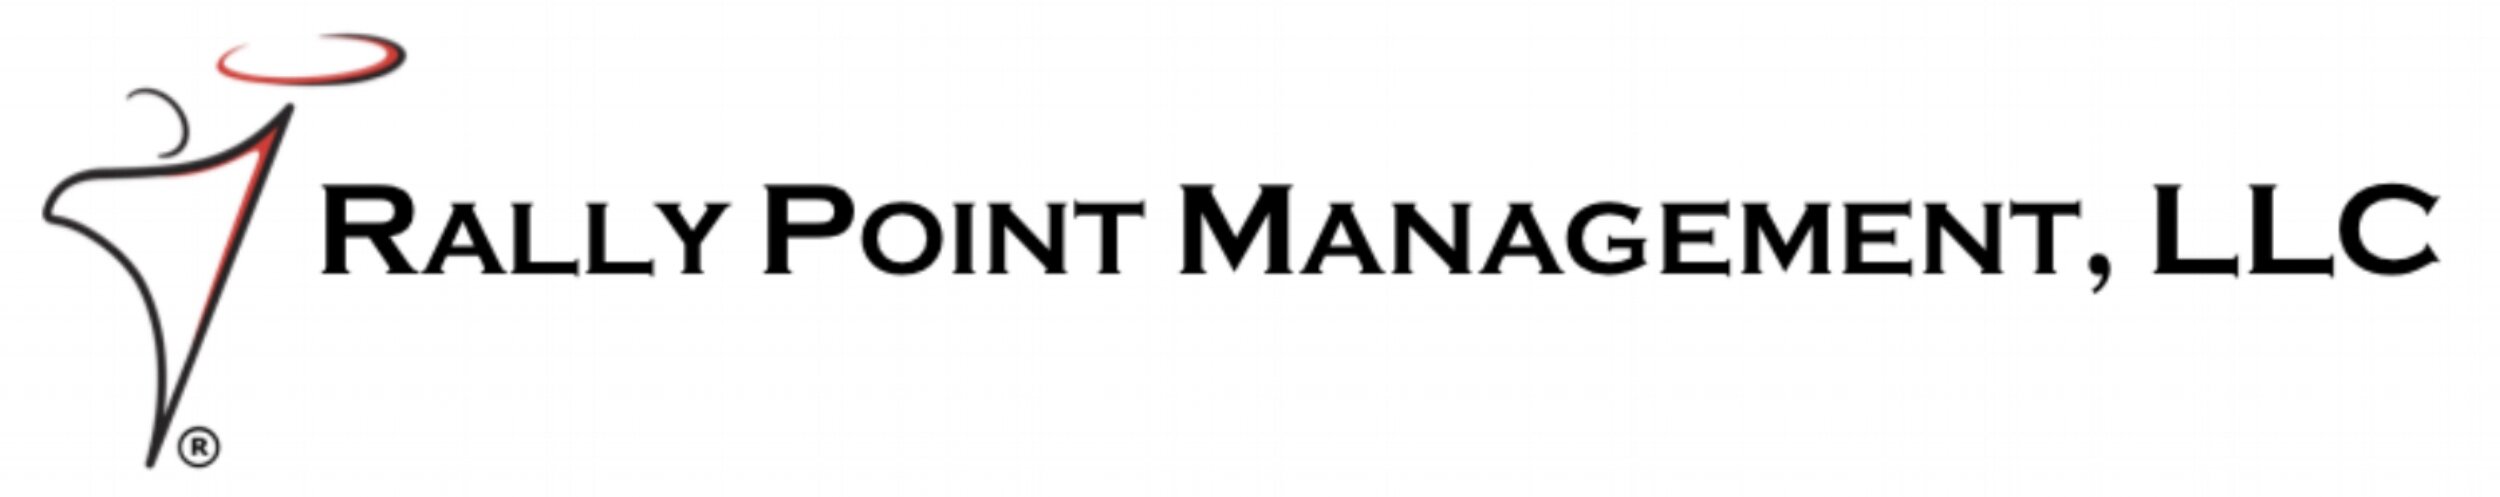 Rally Point Management, LLC